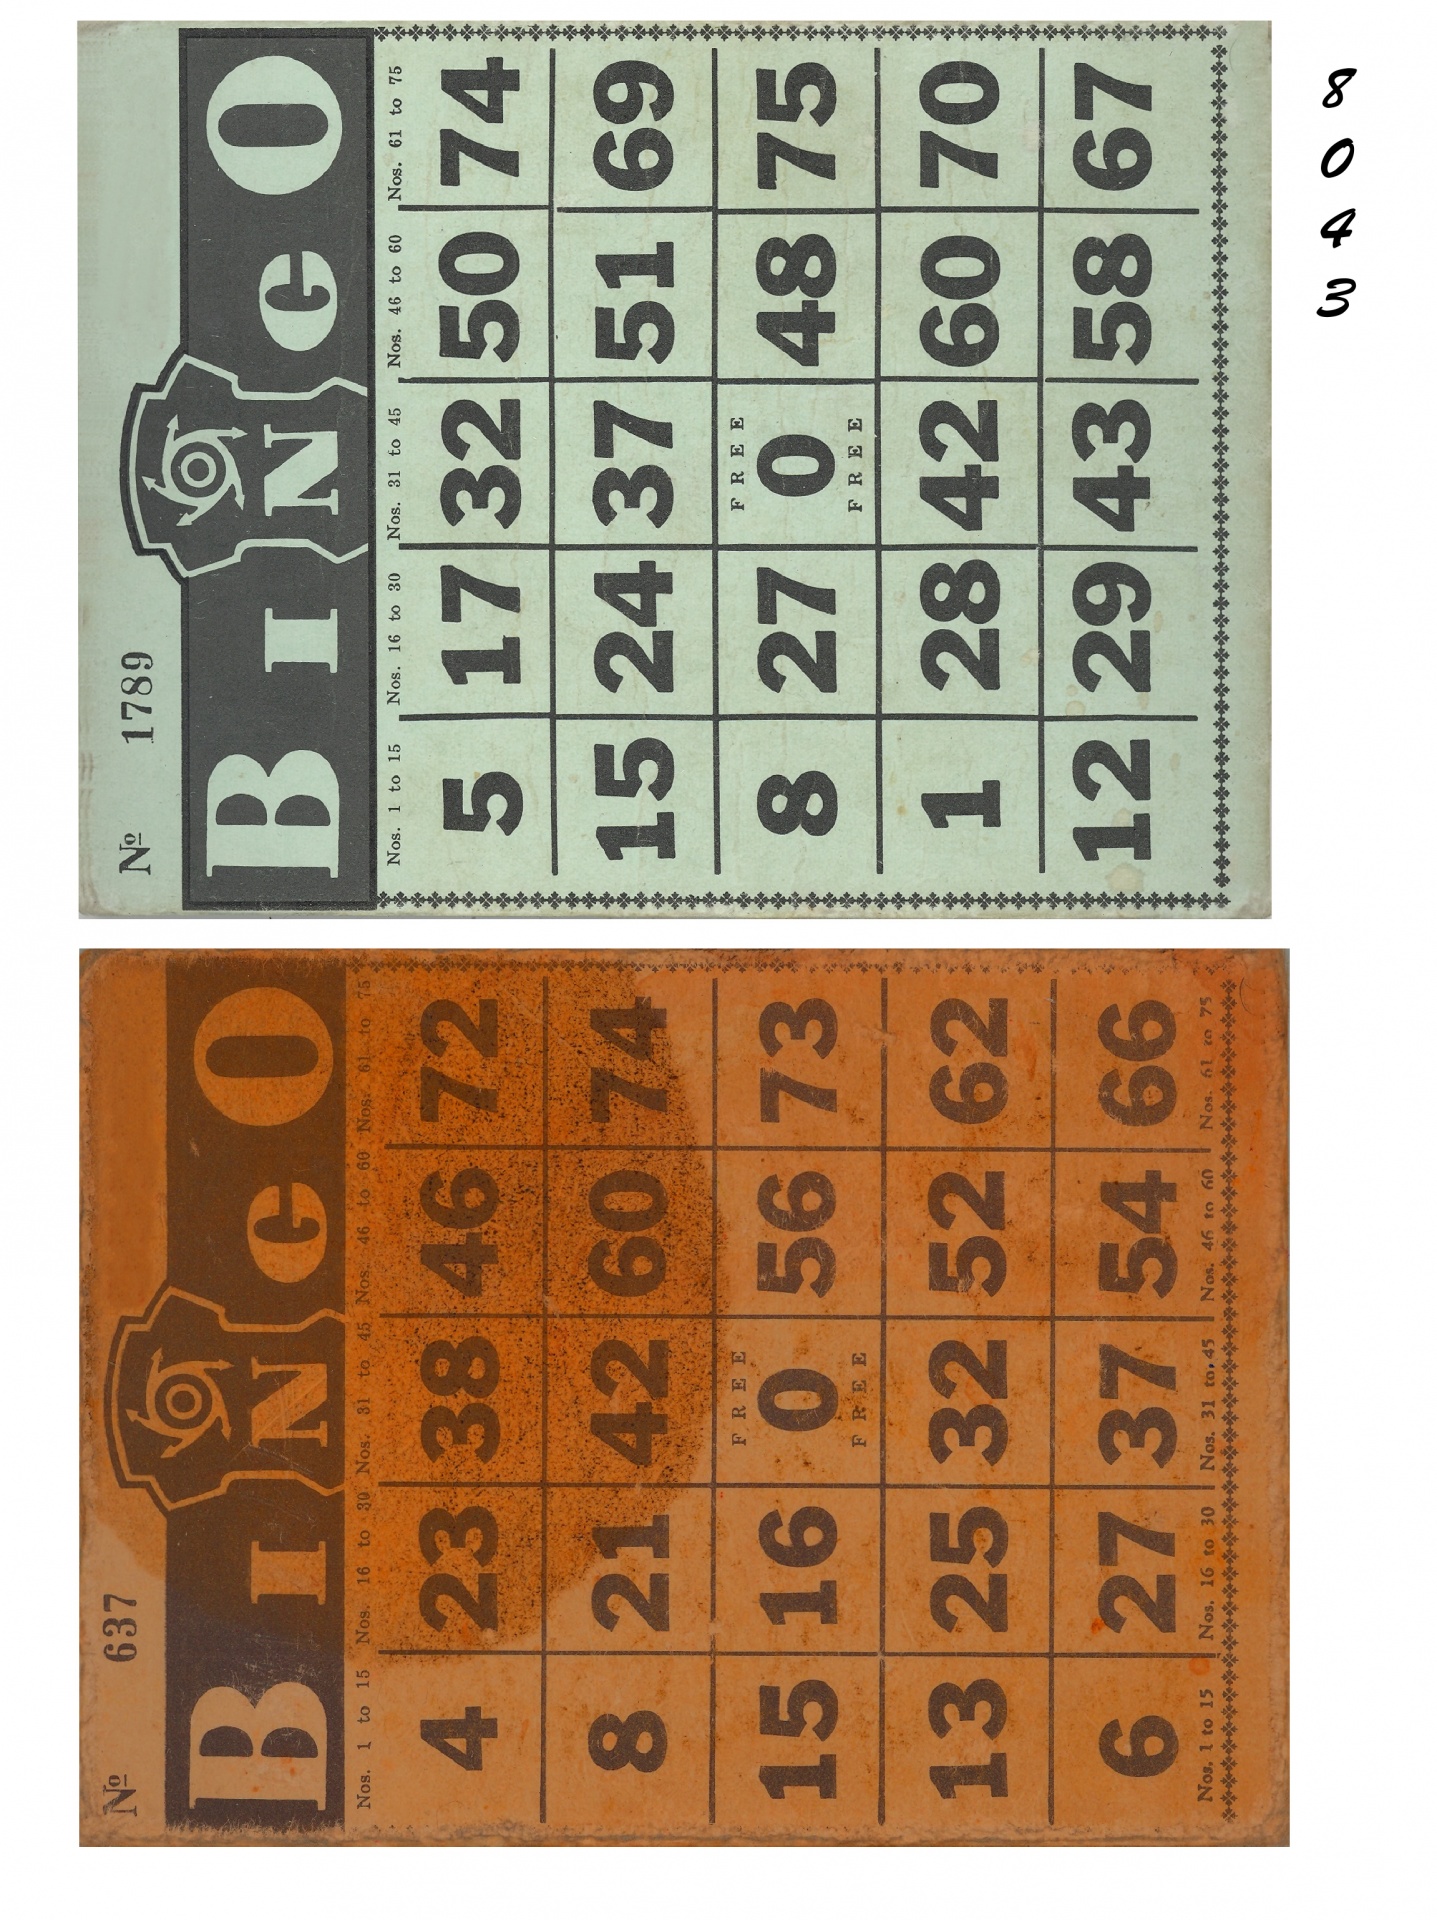 bingo-cards-2-free-stock-photo-public-domain-pictures